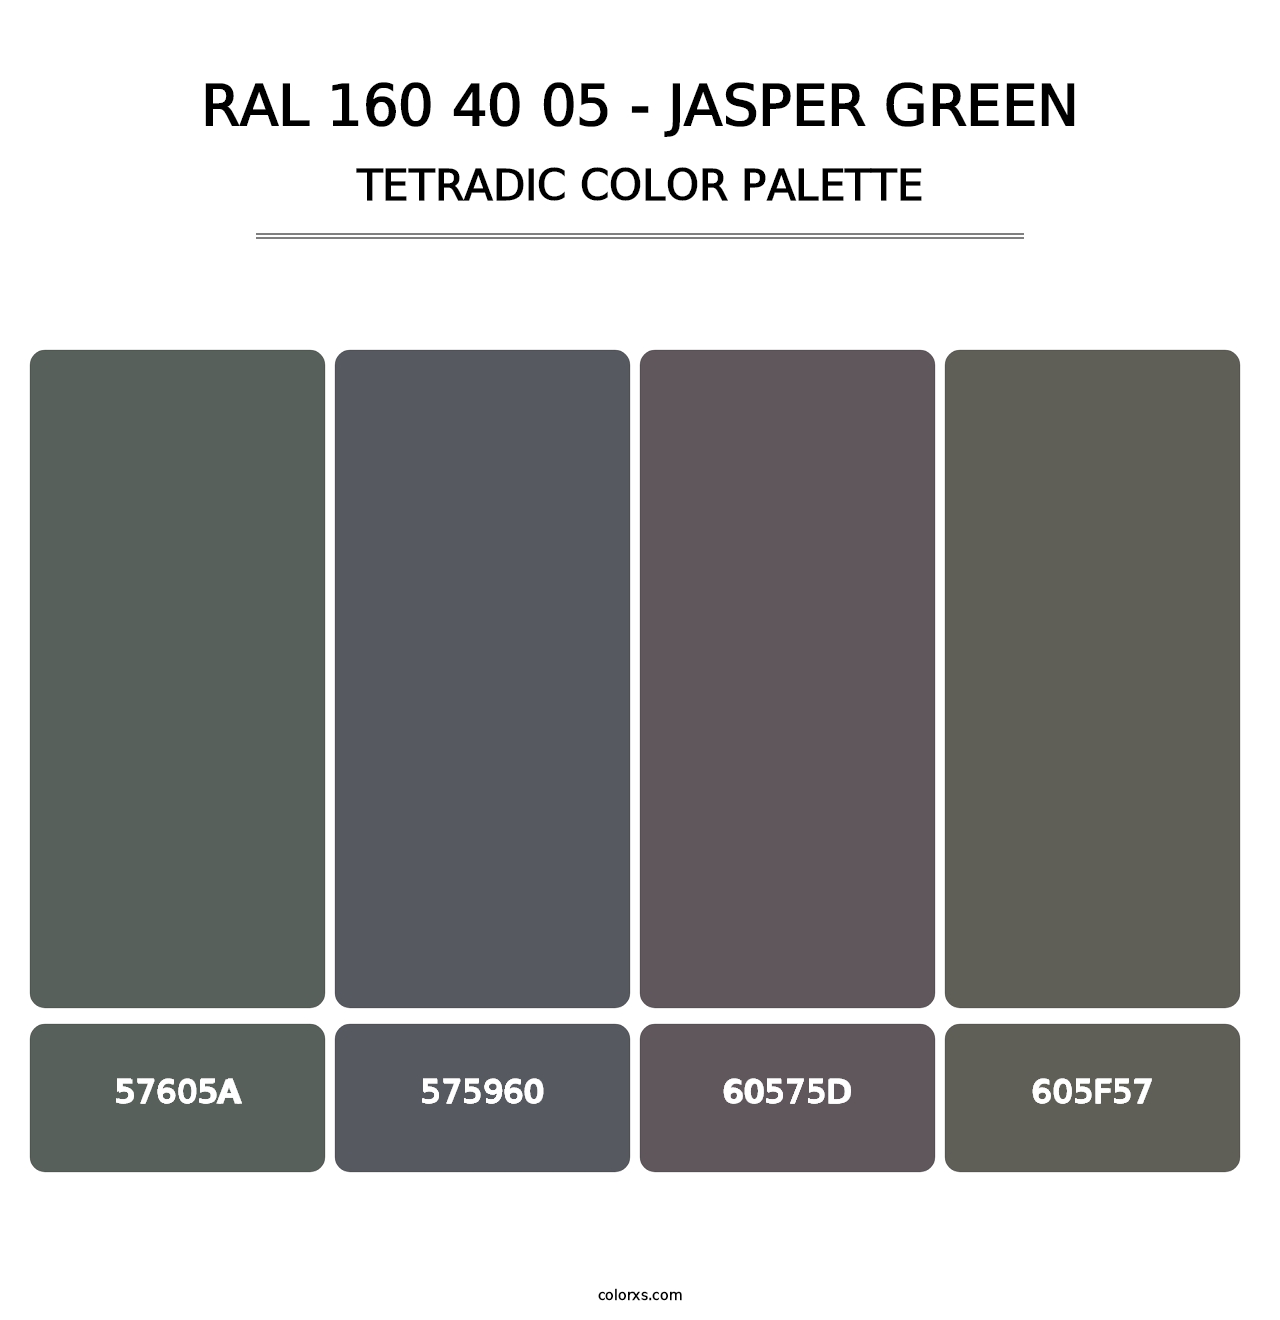 RAL 160 40 05 - Jasper Green - Tetradic Color Palette